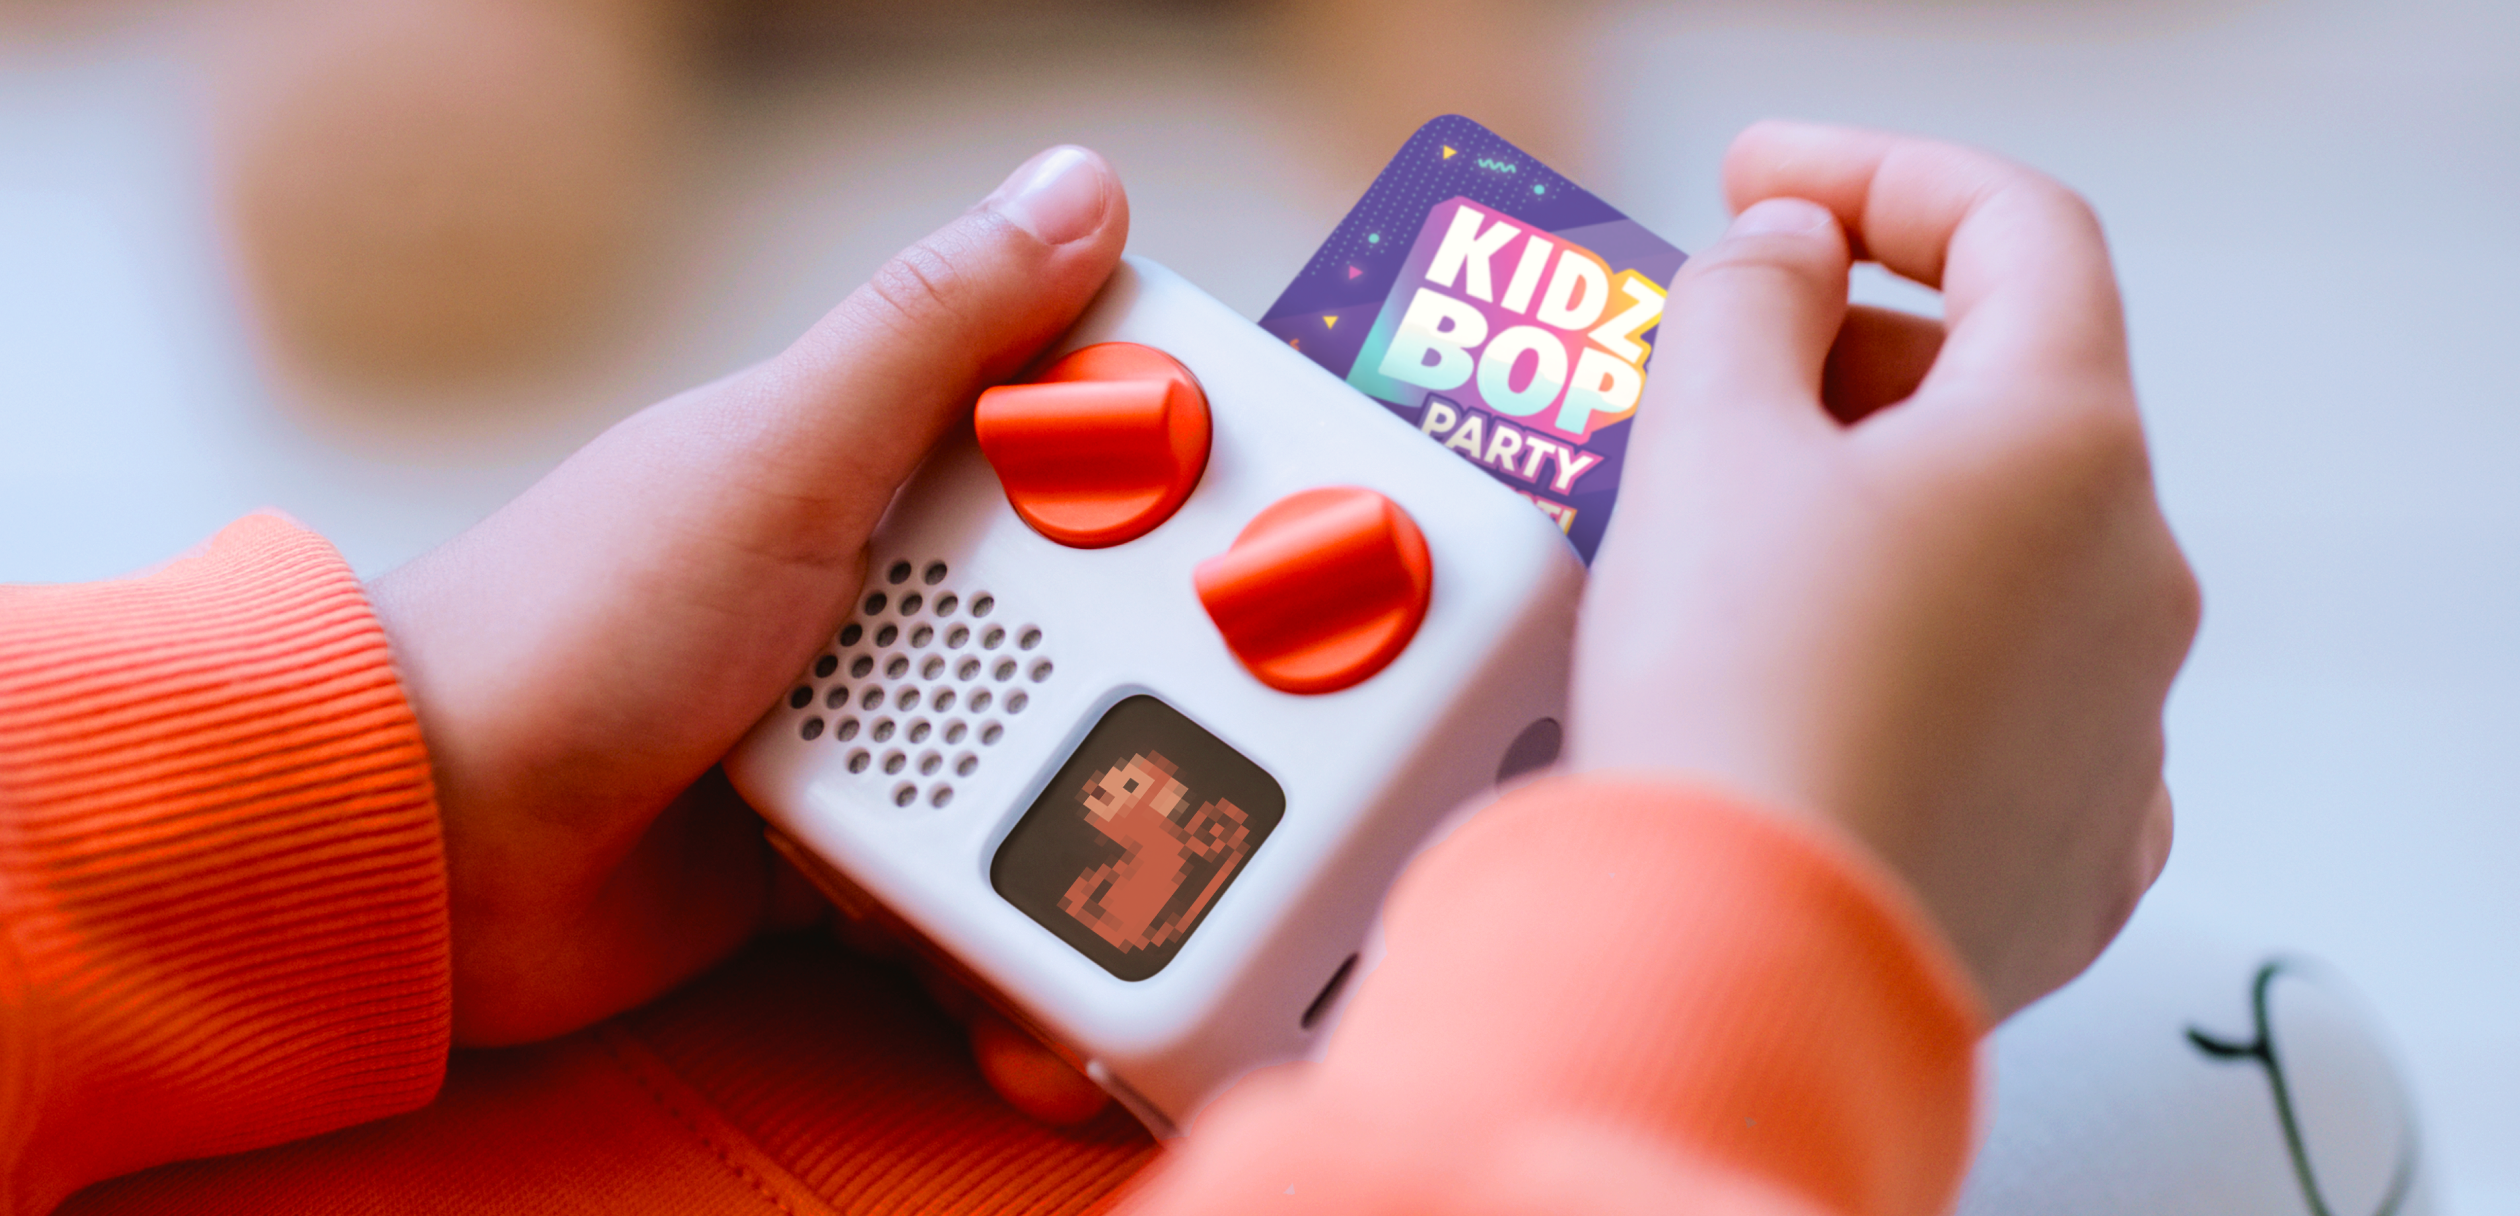 Child holding Yoto mini with Kidz Pop card inserted